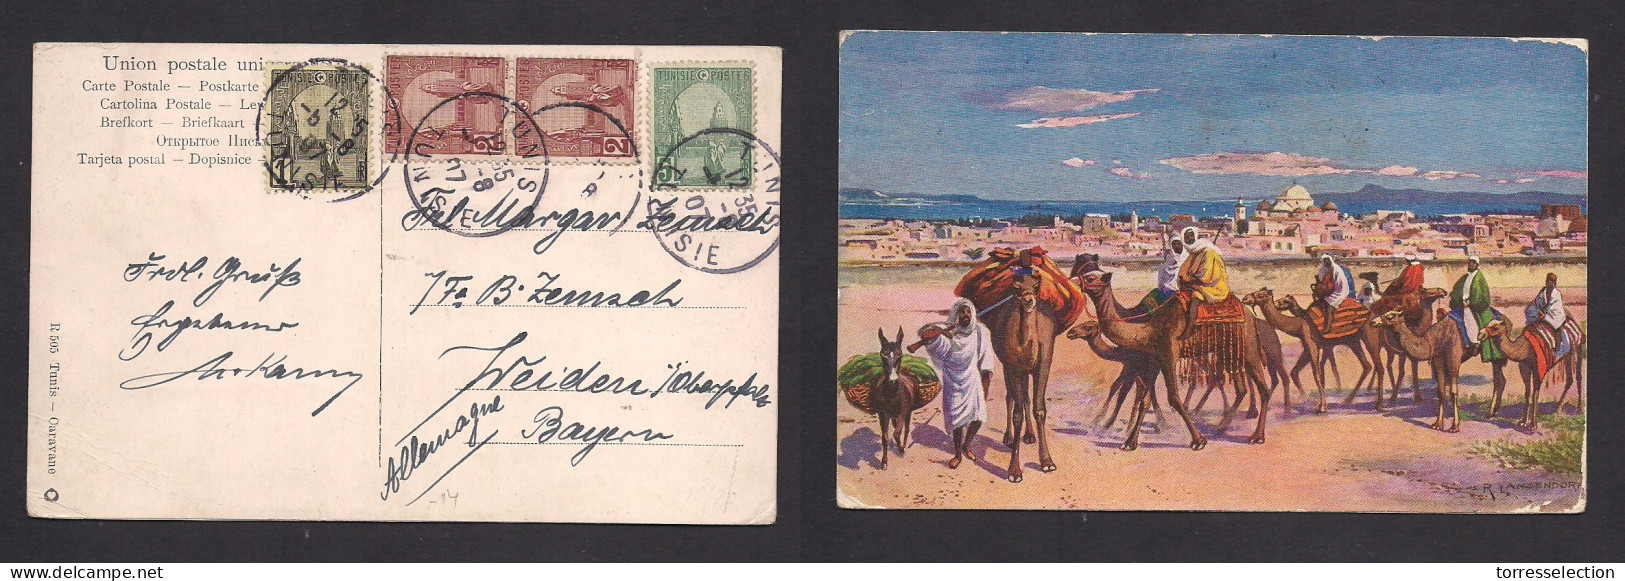 TUNISIA. 1907 (5 Aug) Tunis - Germany, Bayern, Weiden. Multicolor Fkd Pcard, Tied Cds. Fine. XSALE. - Tunisia